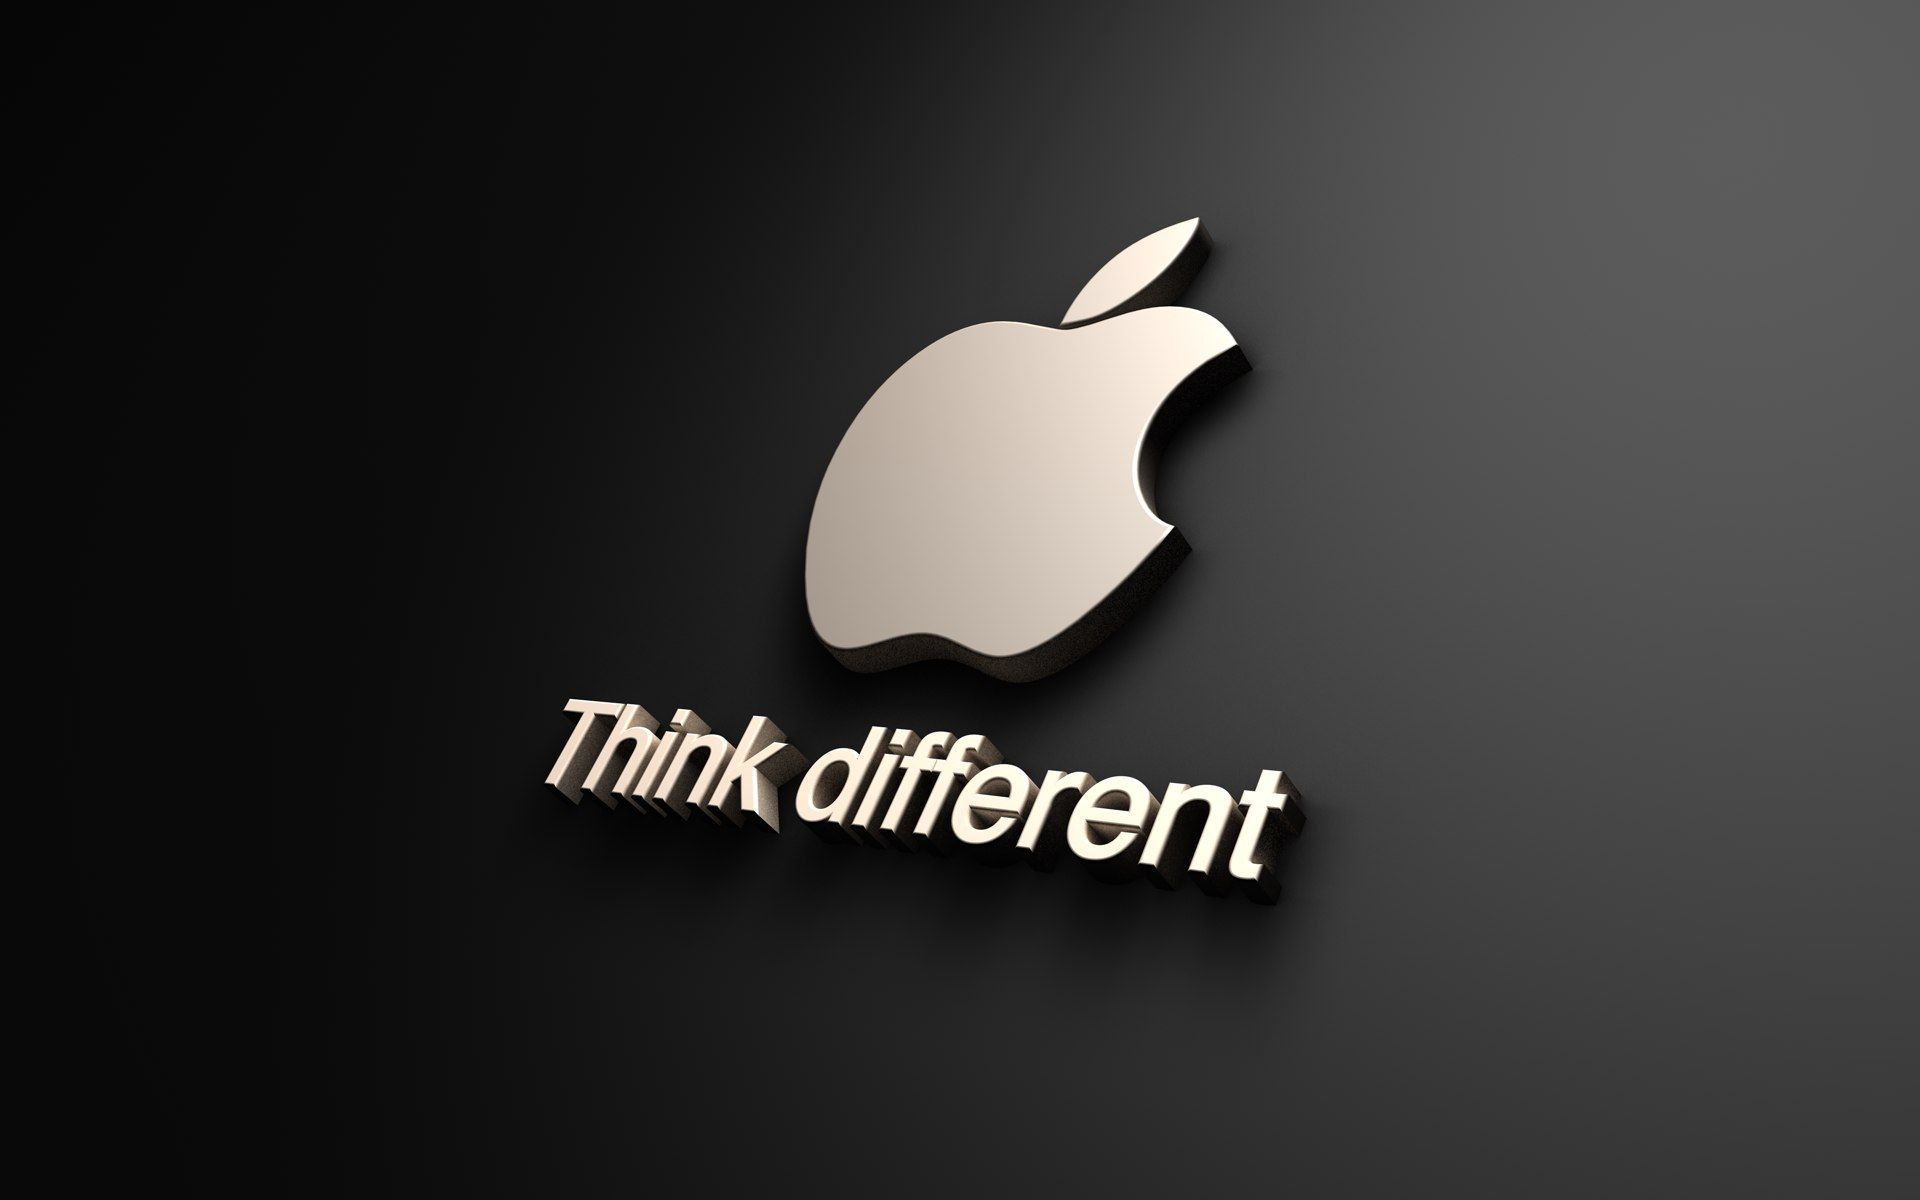 cool apple logo wallpaper #9